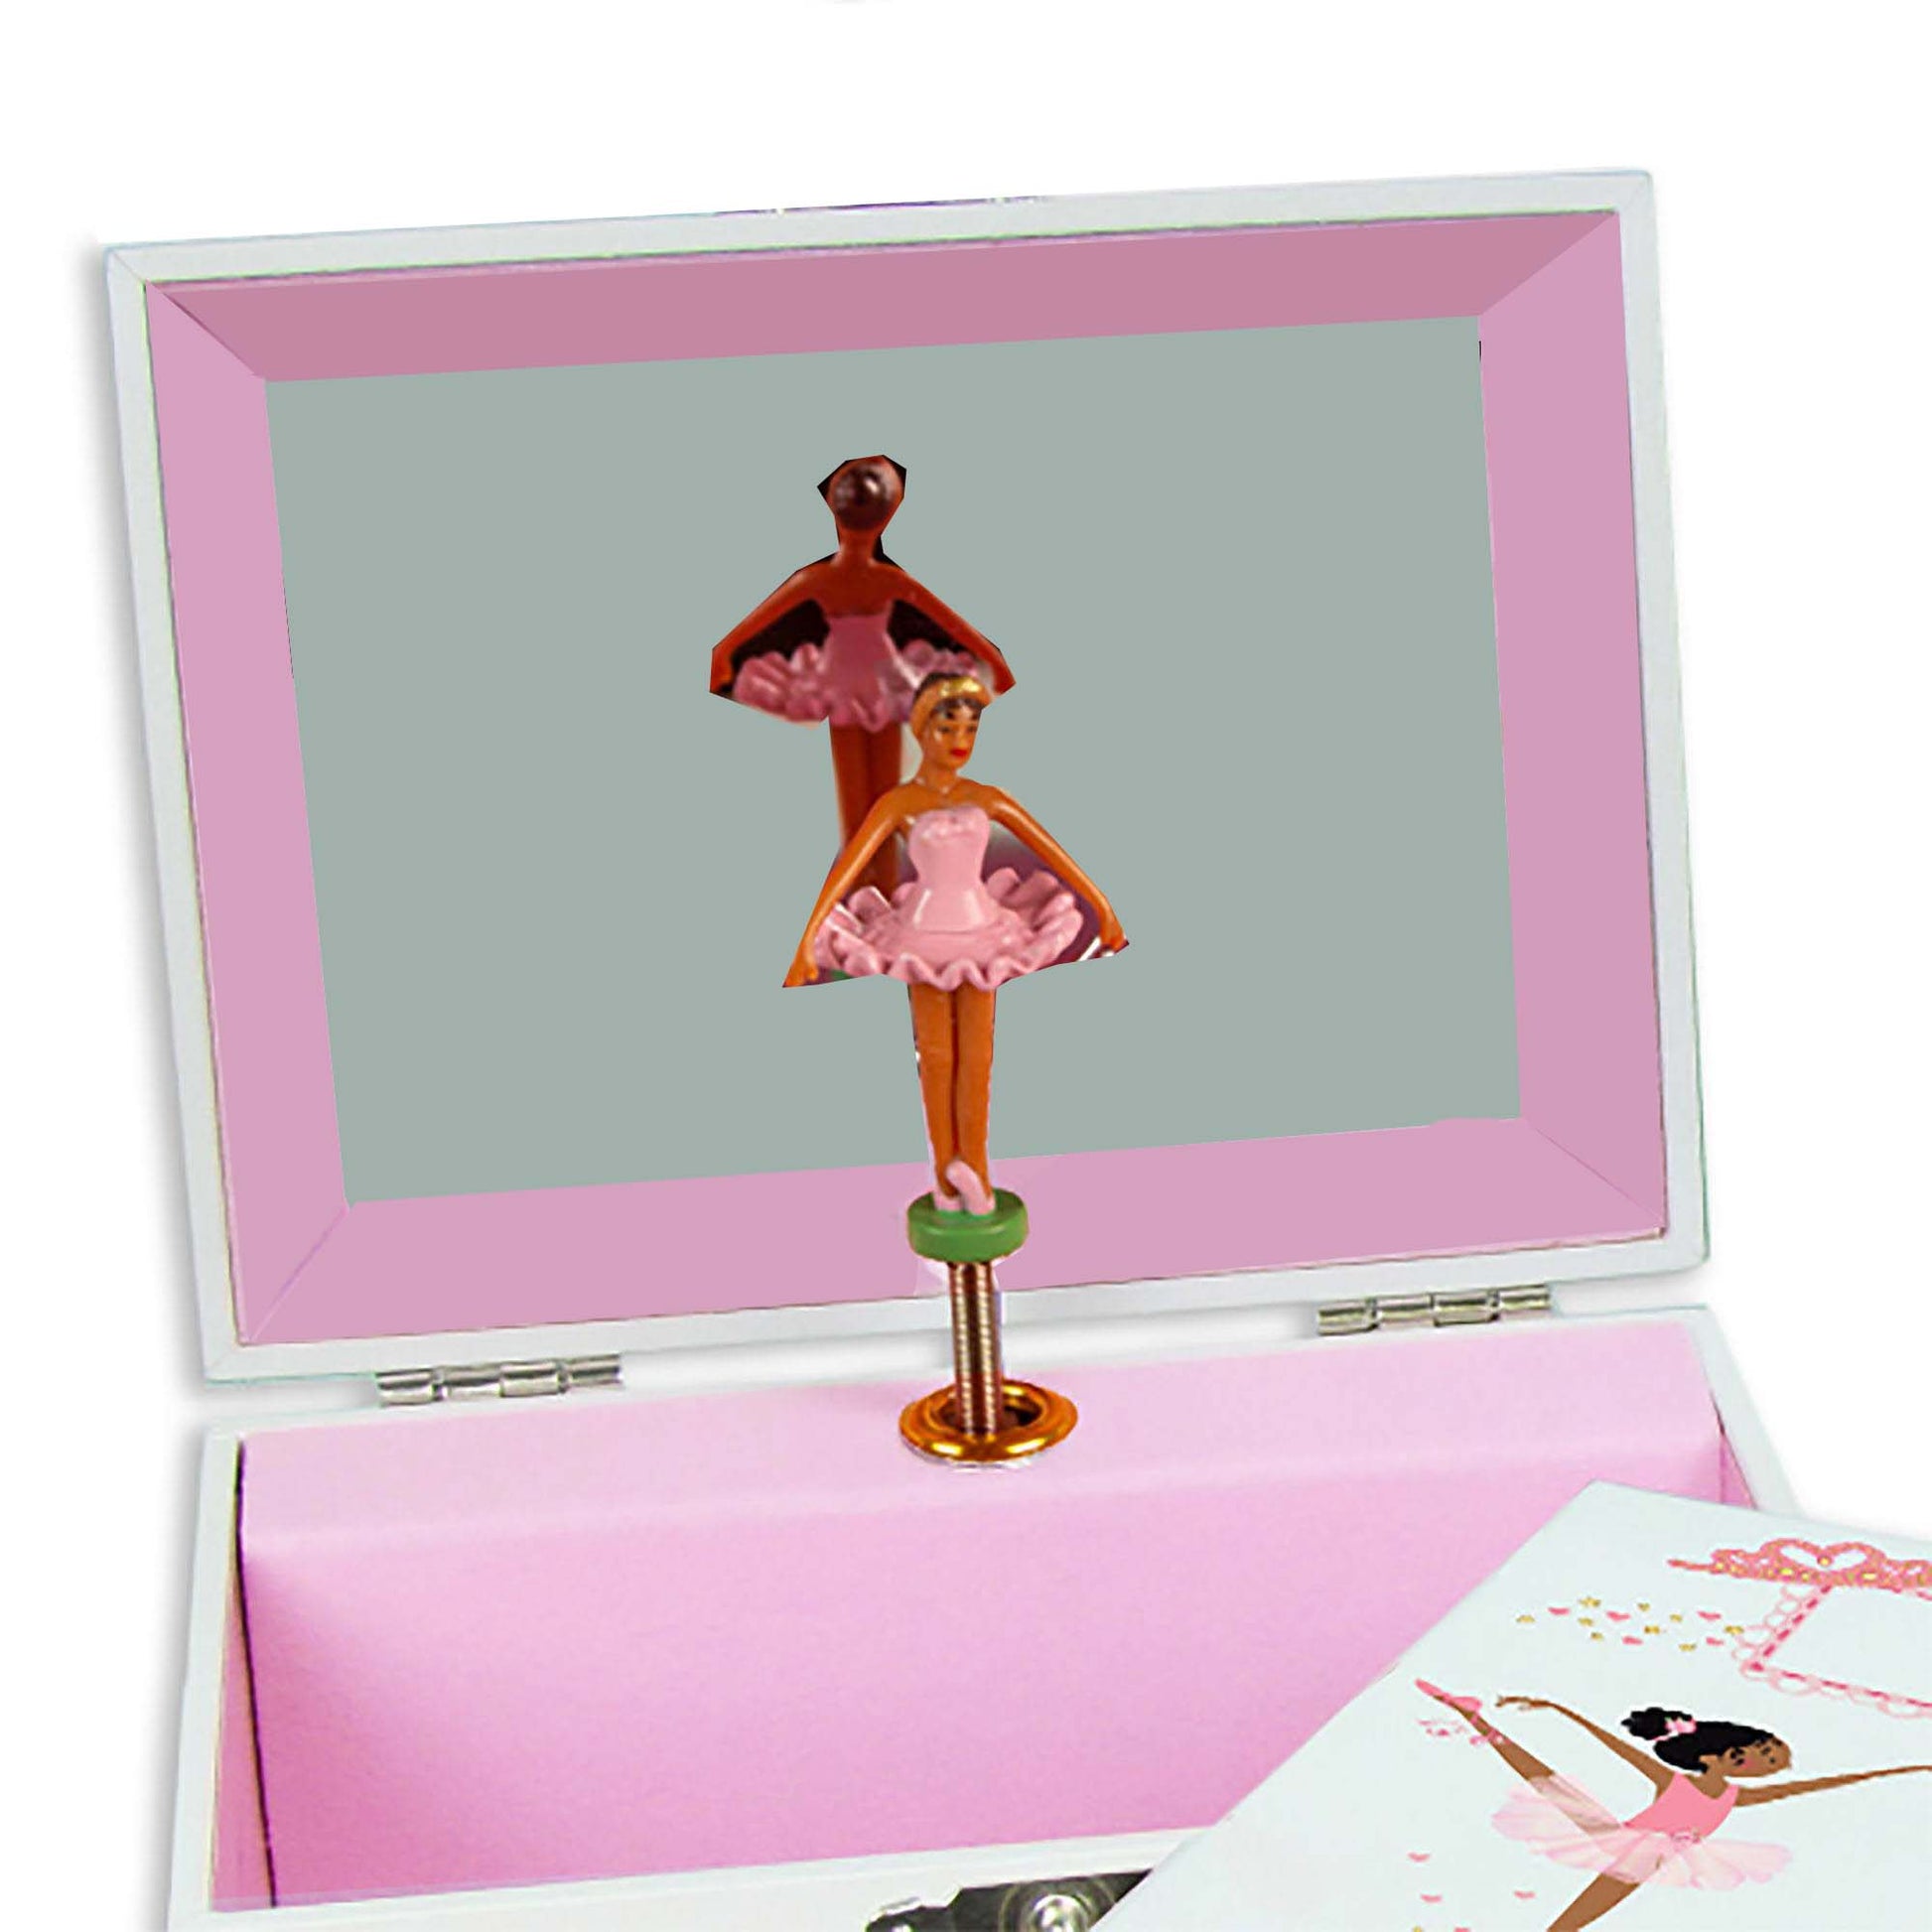 Personalized You Are My Sunshine Ballerina Jewelry Box